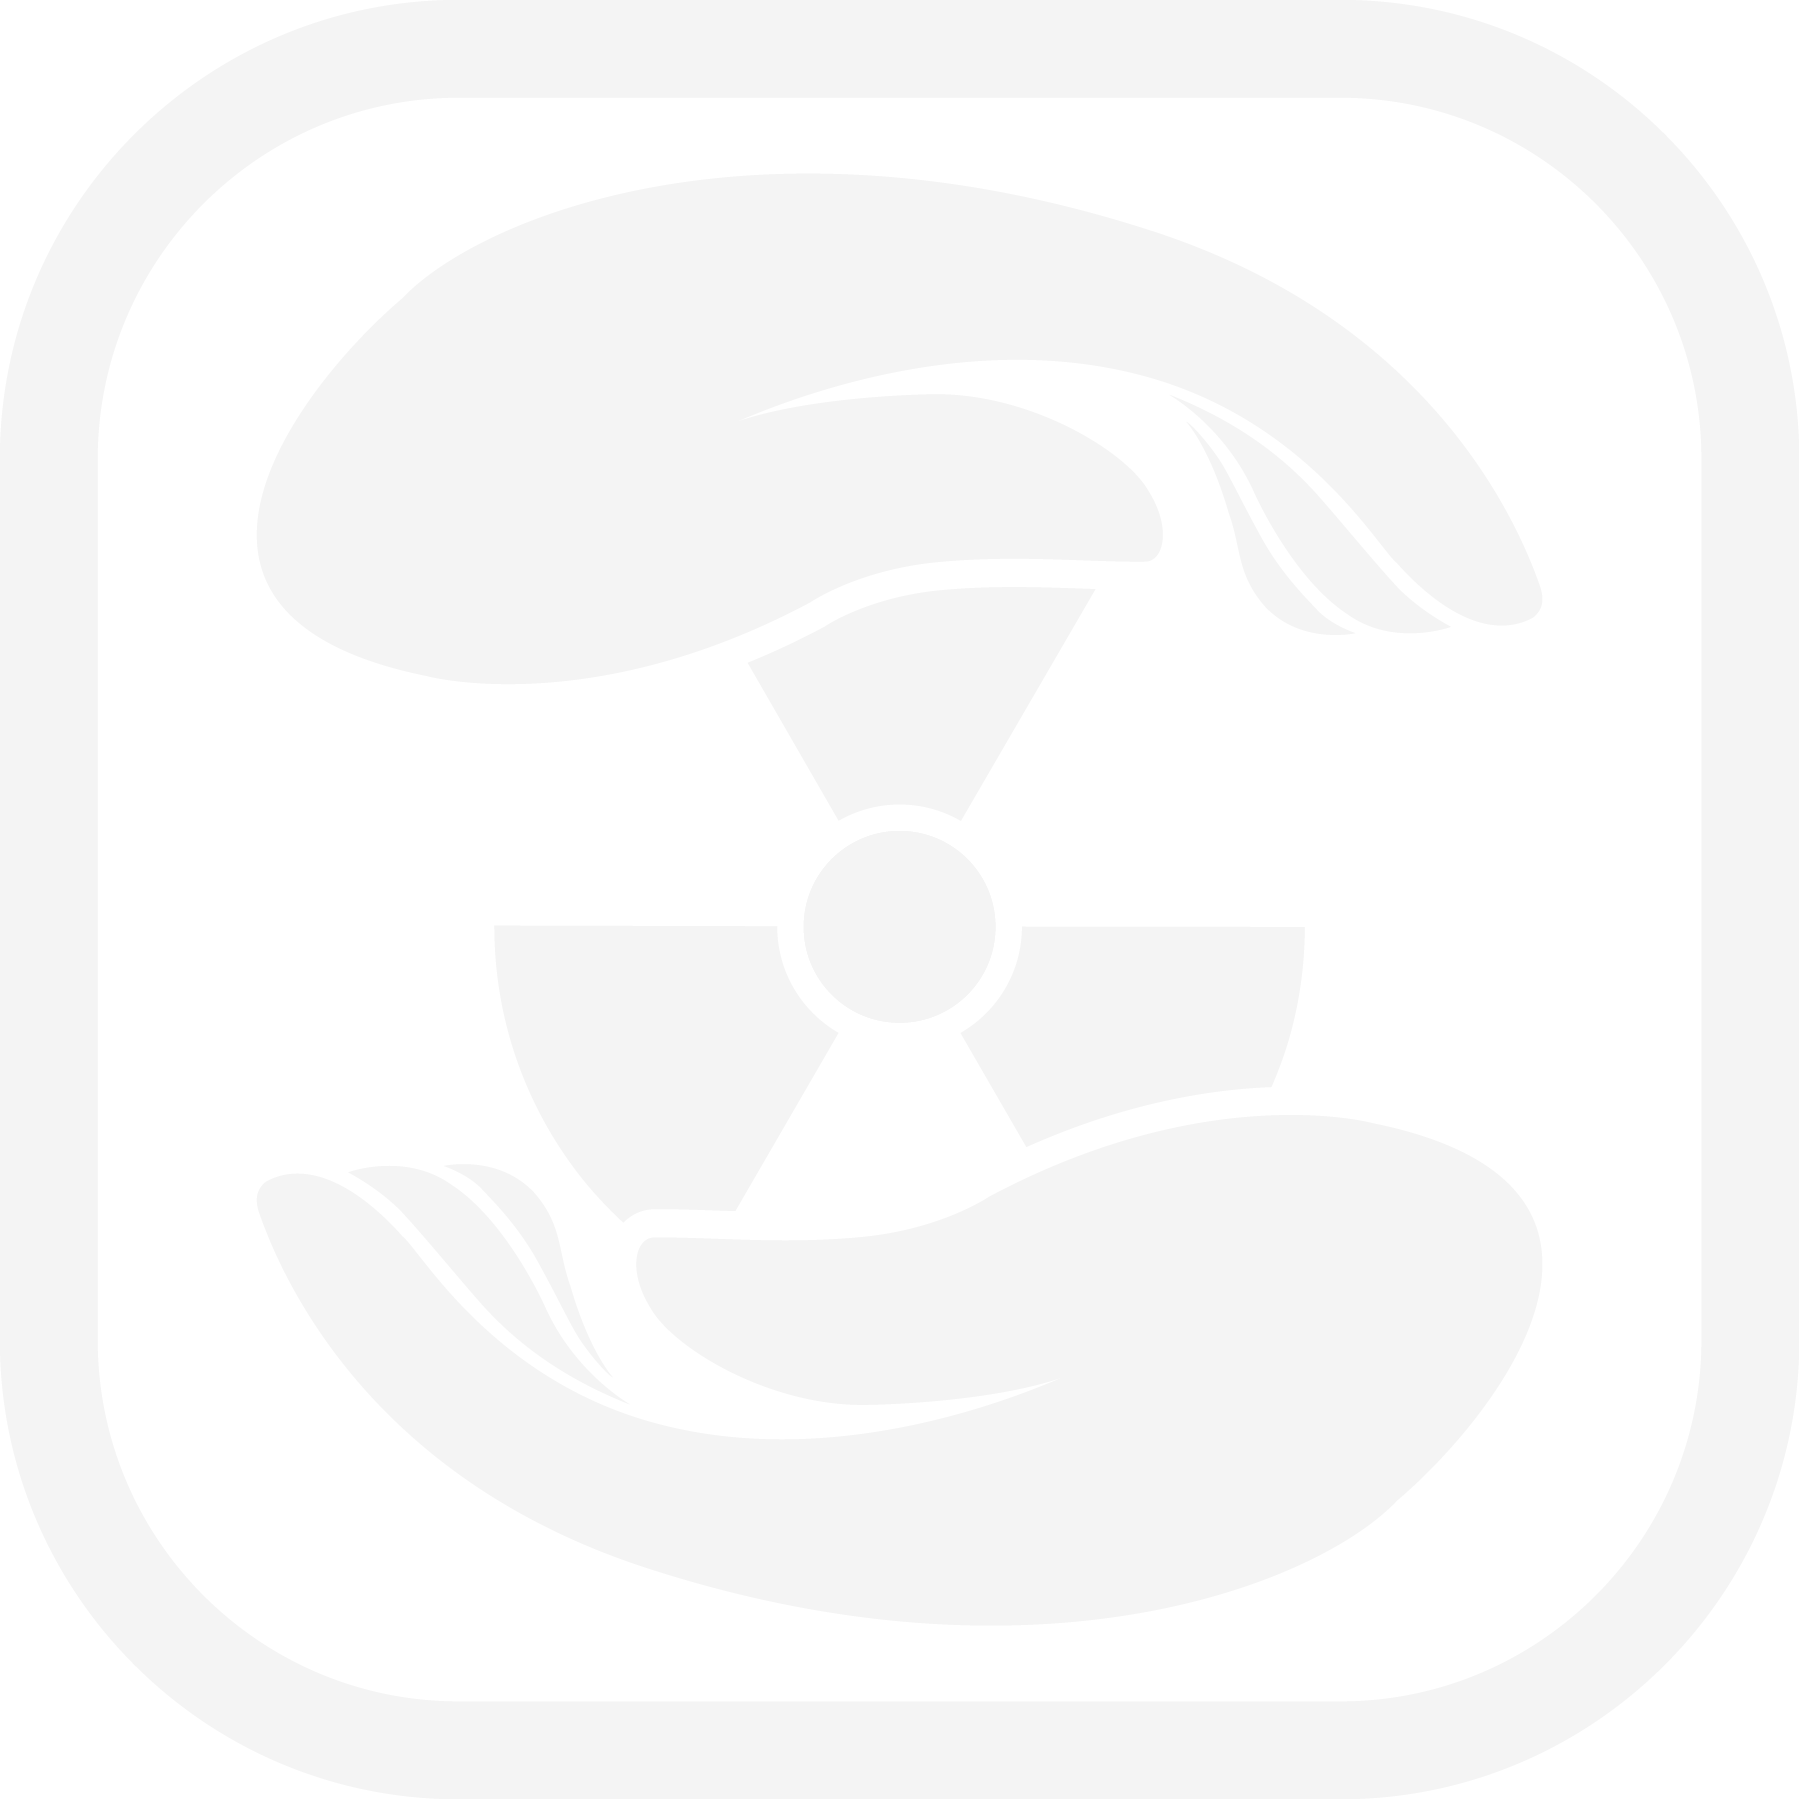 Radiation Clipart Uv Radiation - Illustration - Png Download (1799x1799), Png Download